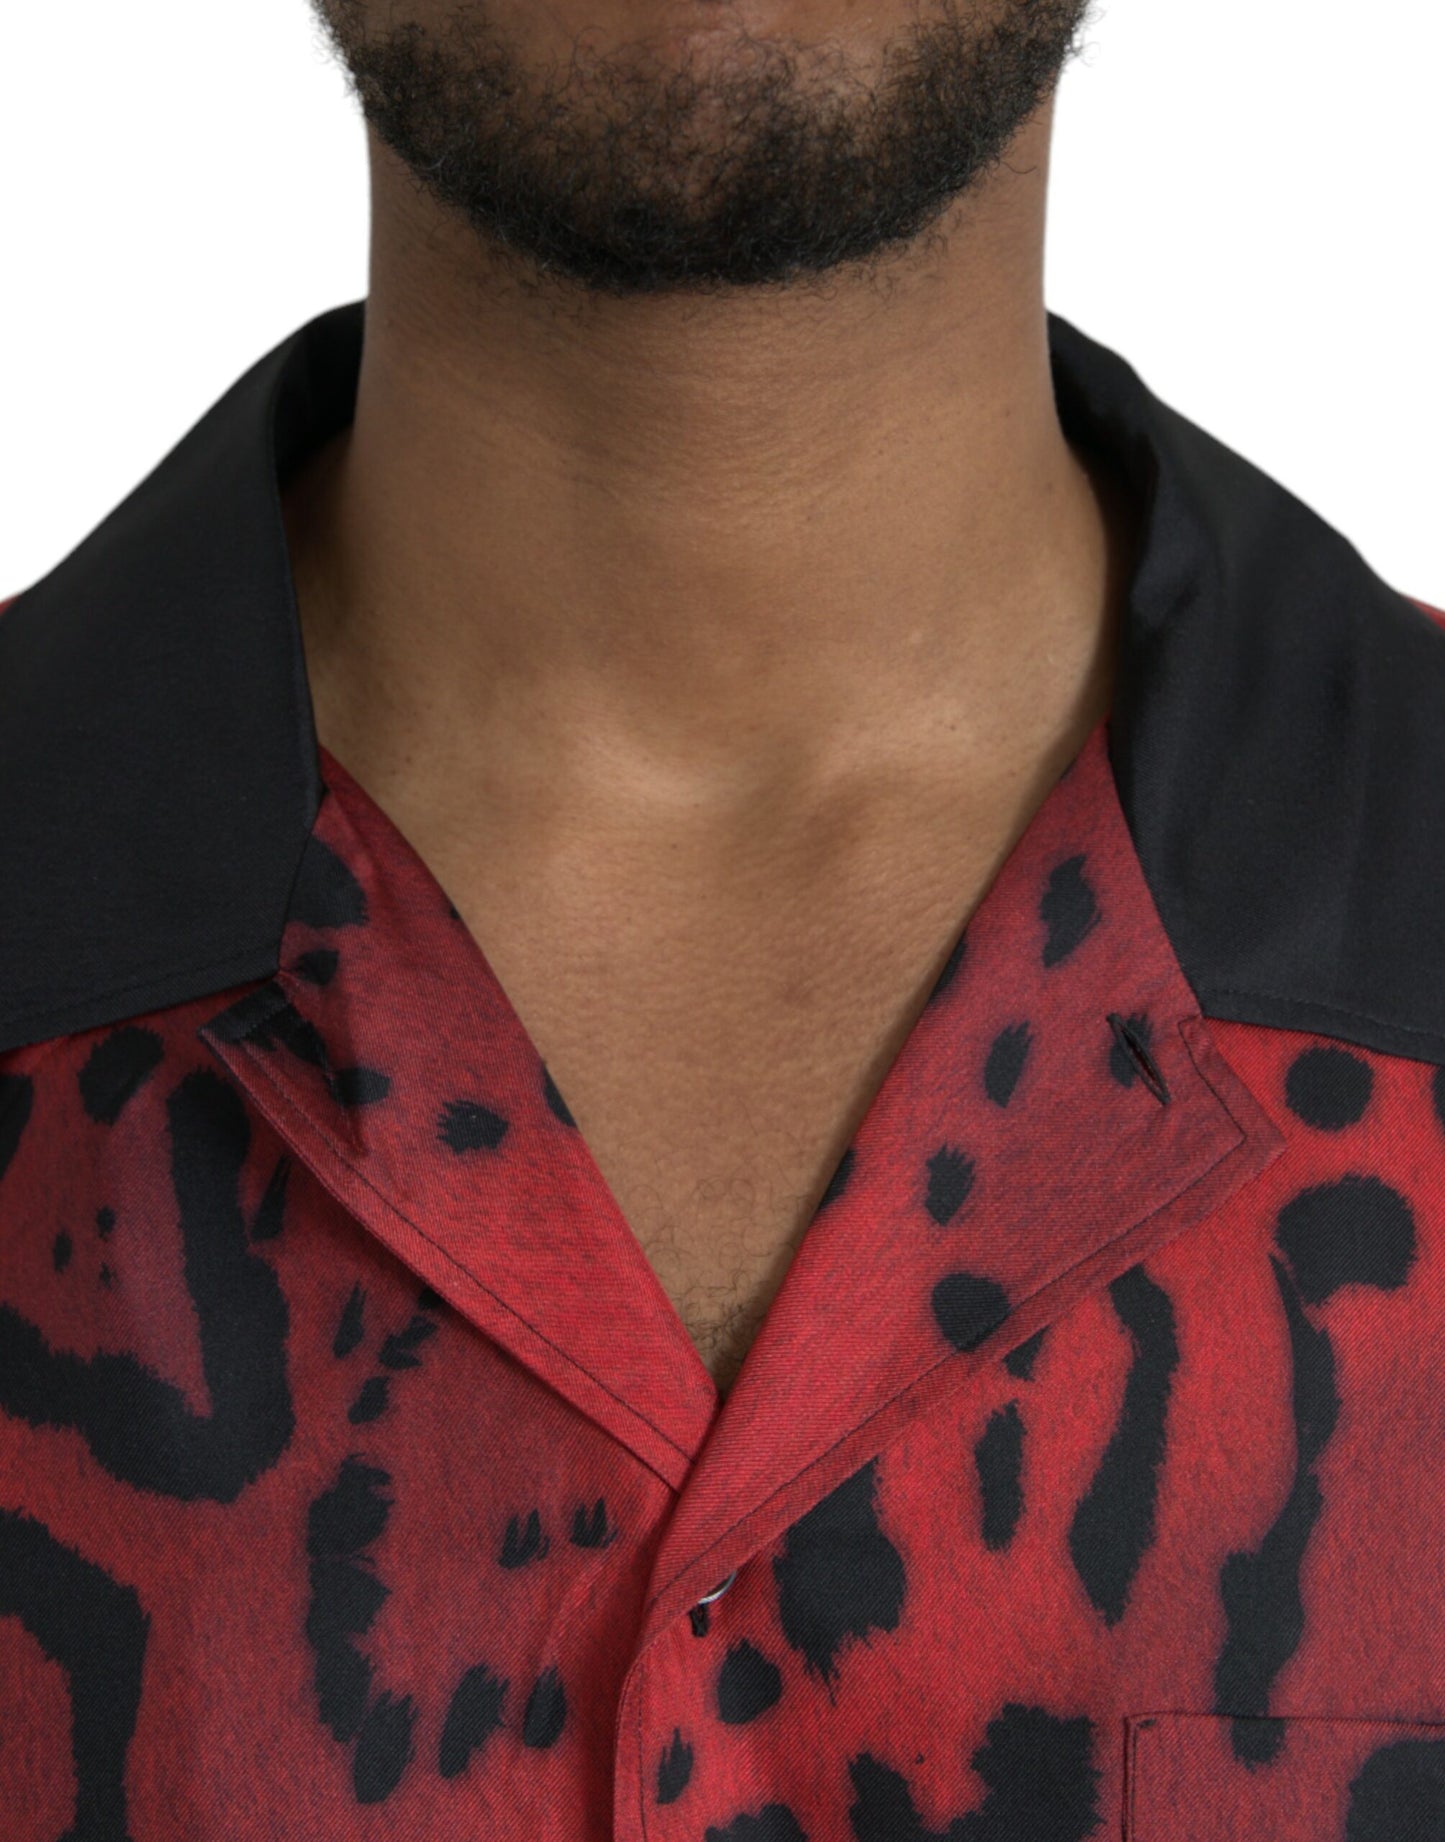 Red Leopard Silk Button Down Casual Shirt